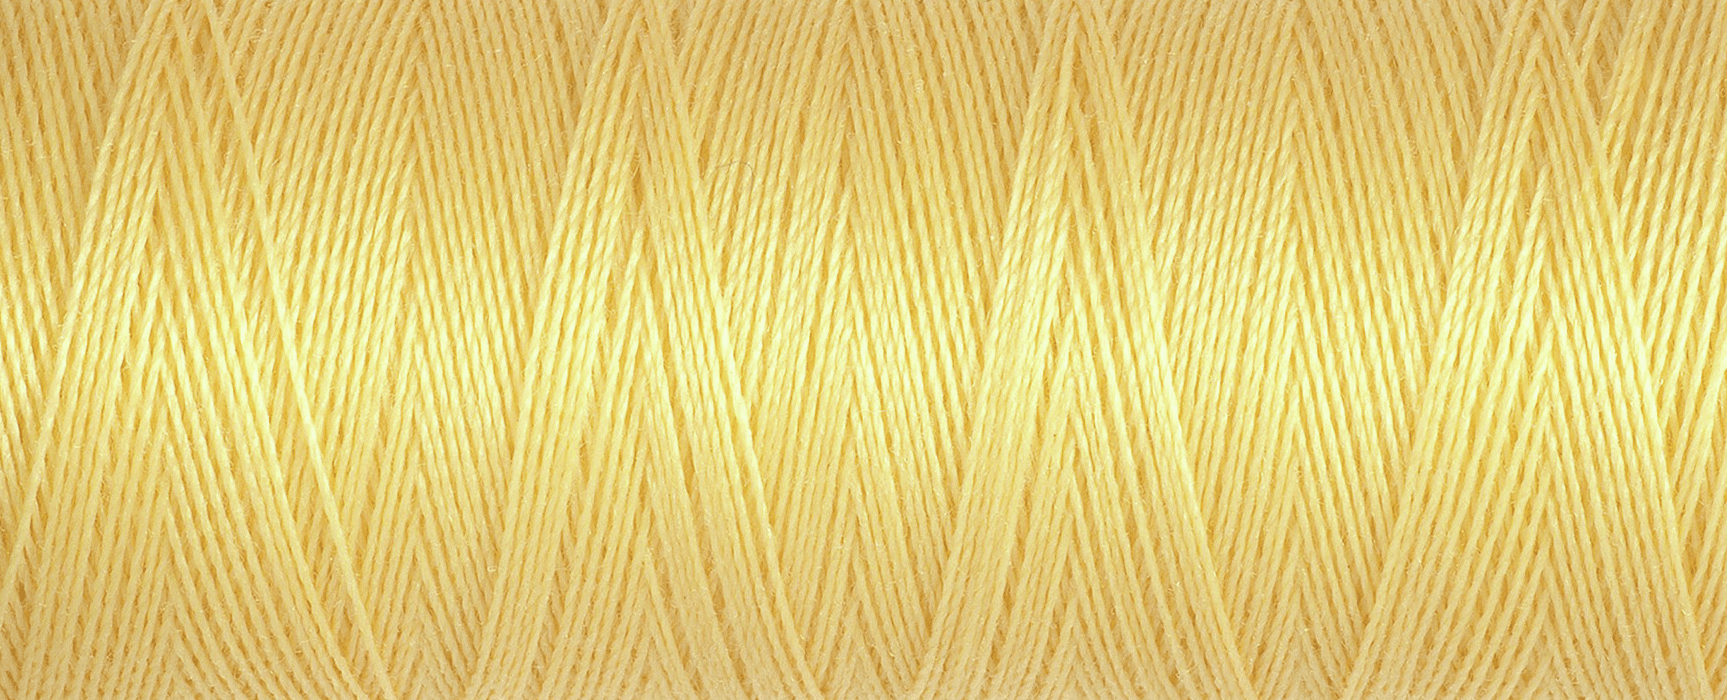 Gutermann Sew-All Thread - 100M (7)-Thread-Jelly Fabrics